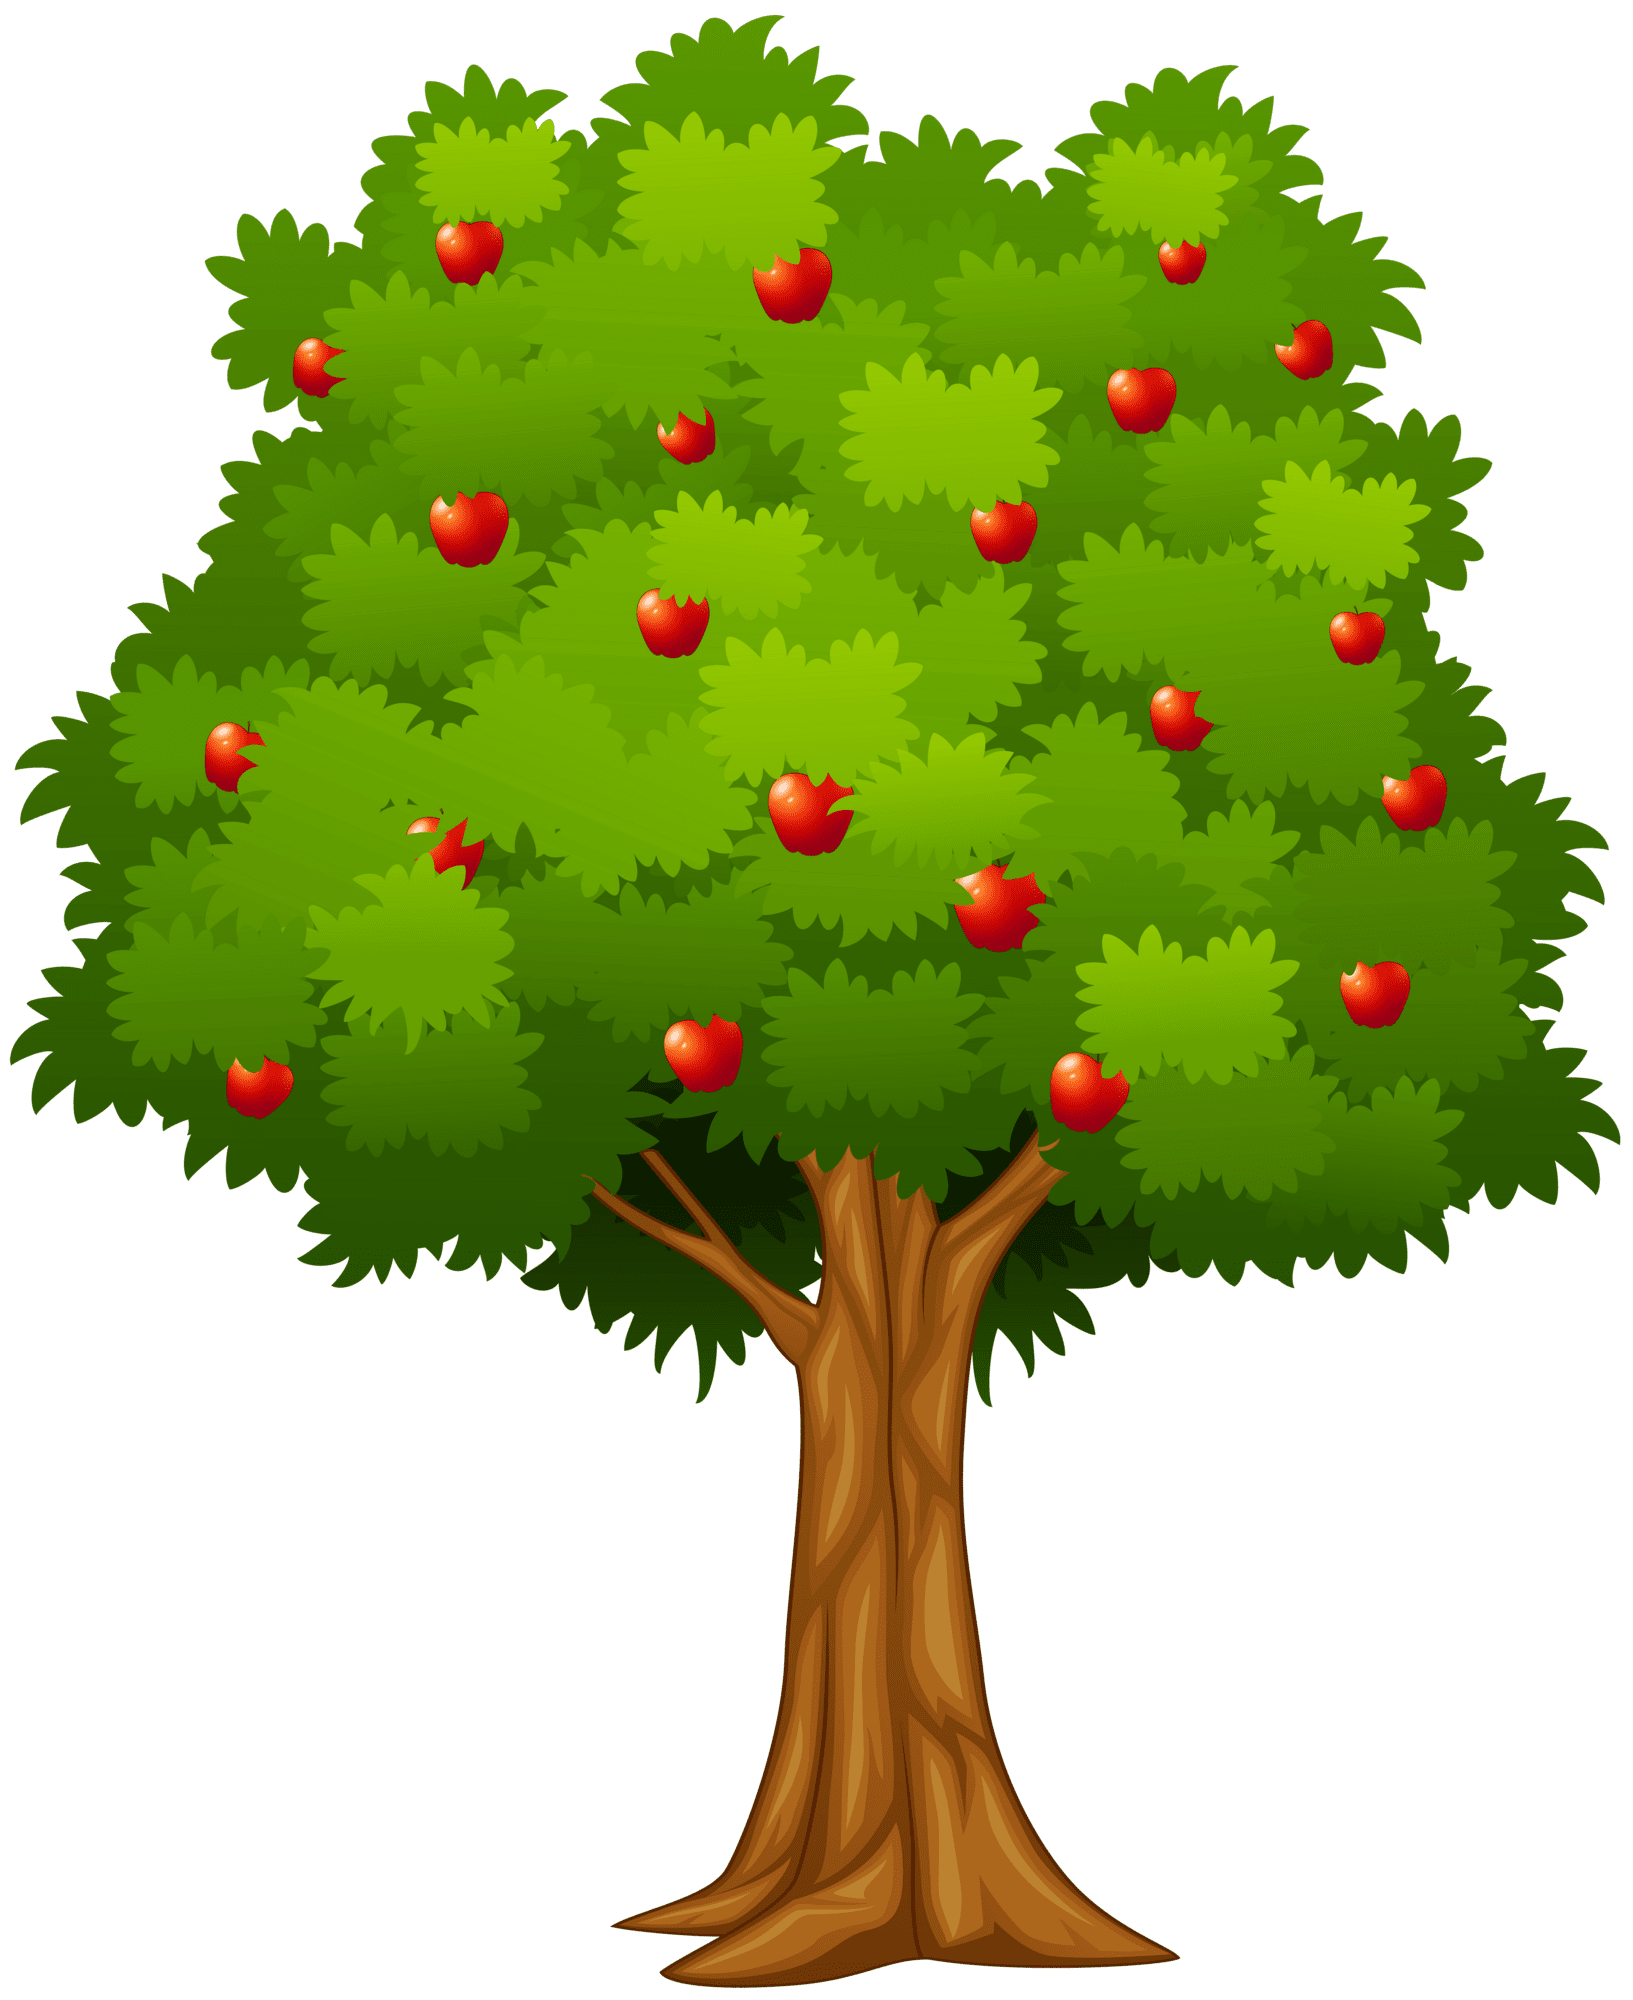 Apple tree clipart image high